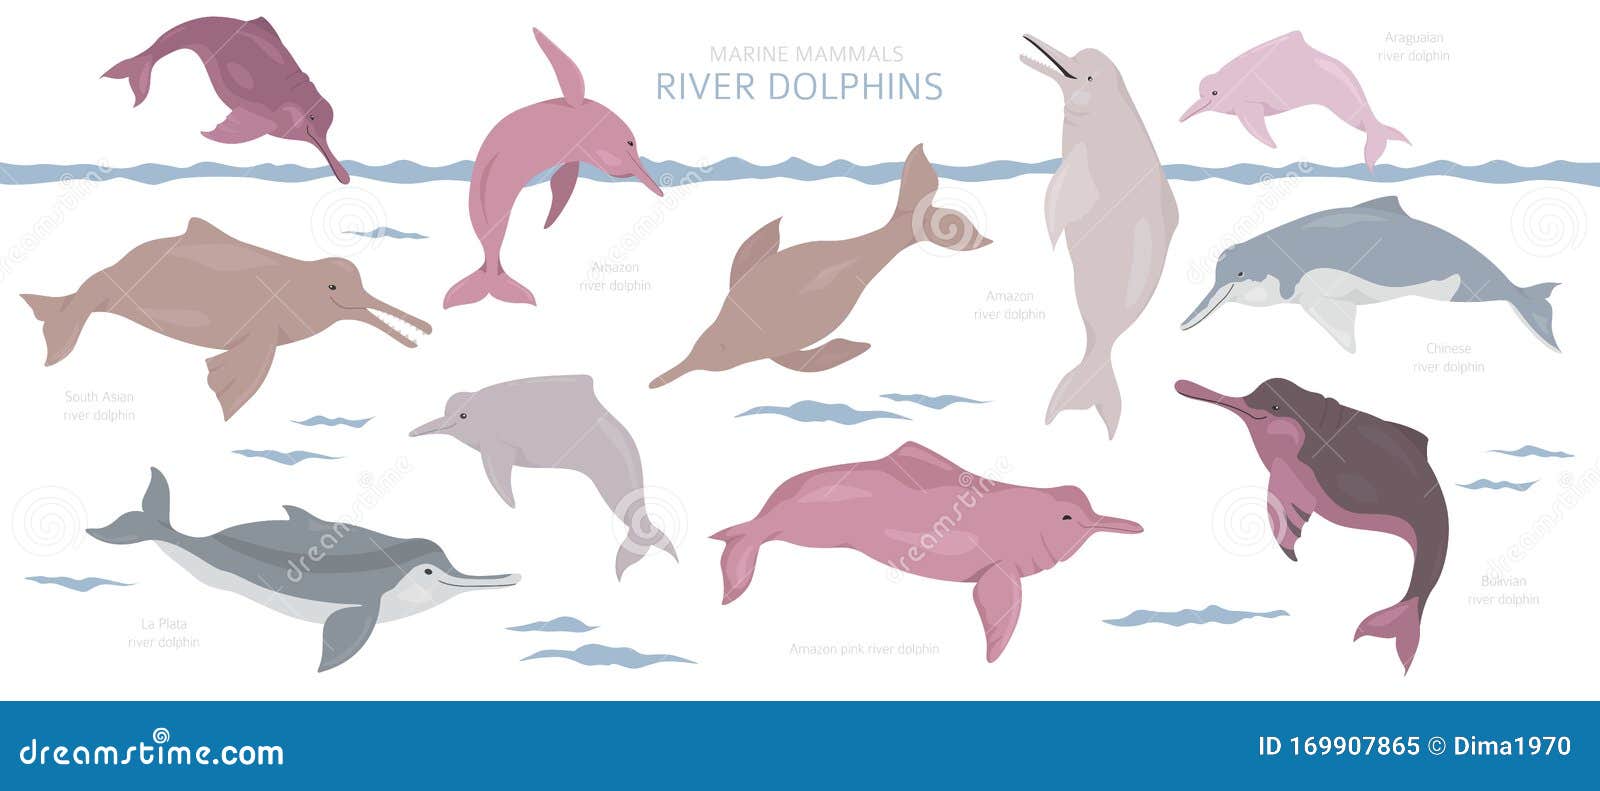 Amazon River Dolphin Stock Illustrations 73 Amazon River Dolphin Stock Illustrations Vectors Clipart Dreamstime